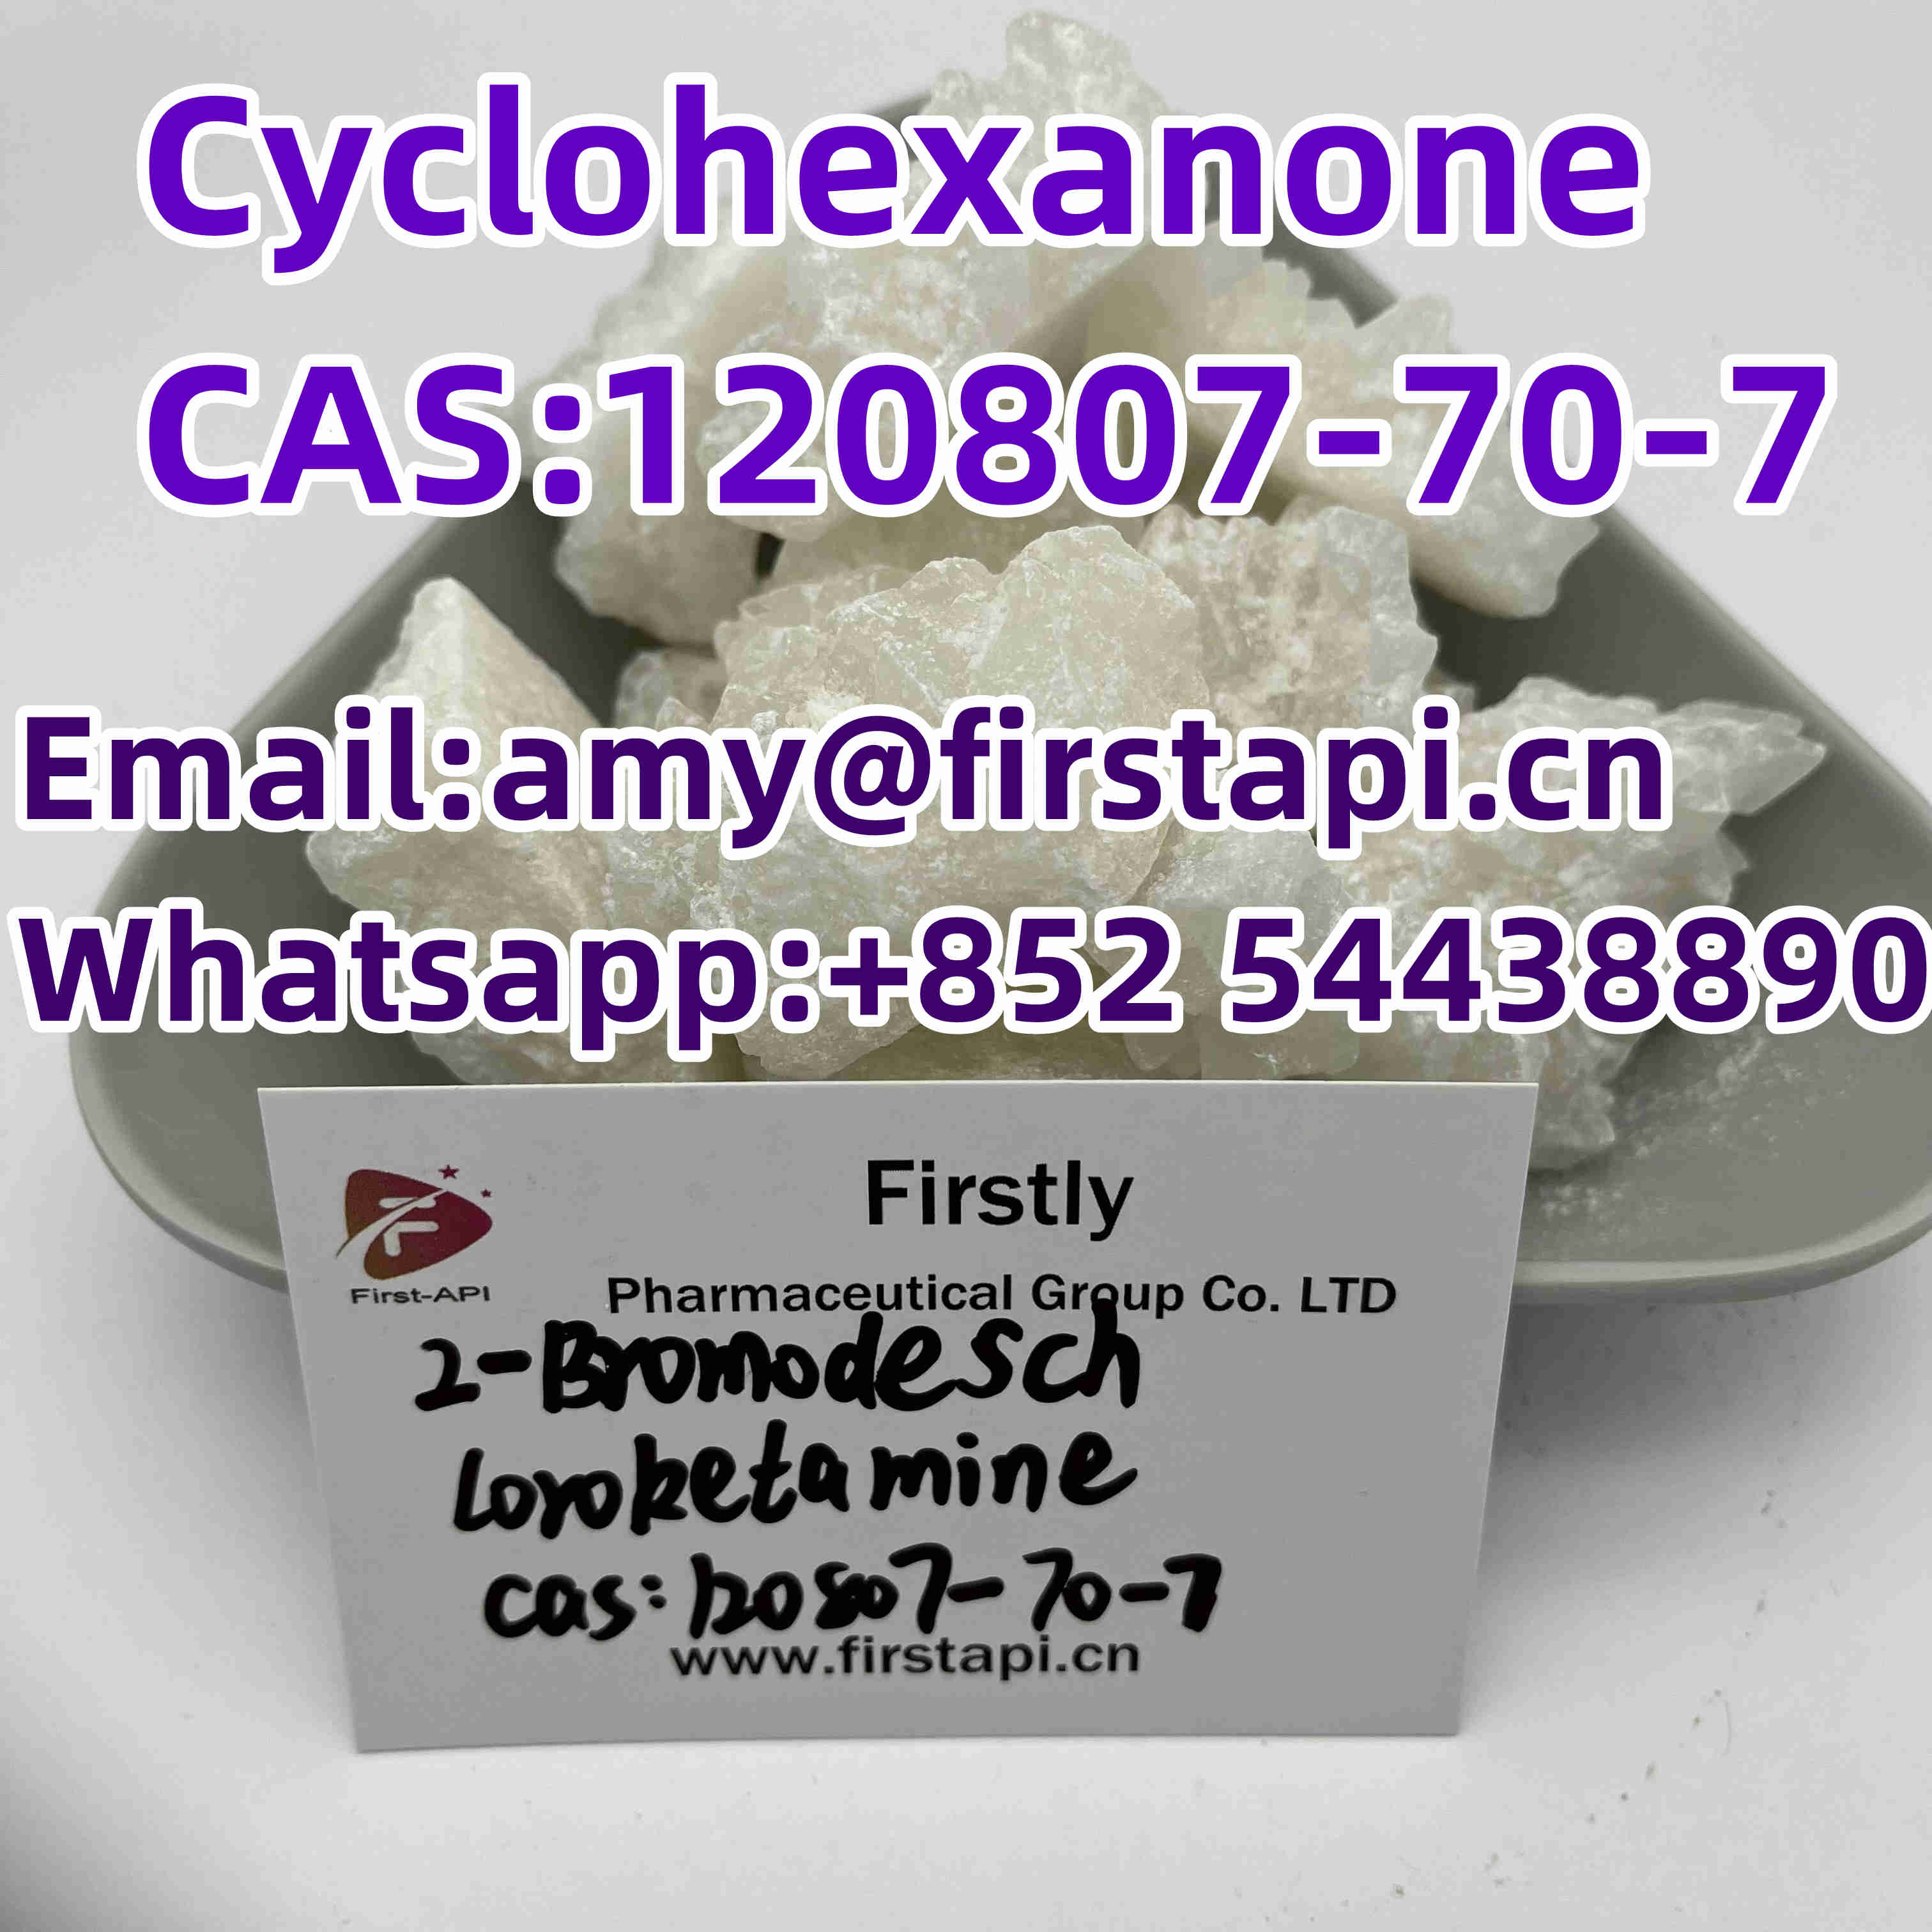 Whatsapp:+852 54438890,Chemical Name: Cyclohexanone ,CAS No.: 120807-70-7 ,, - photo